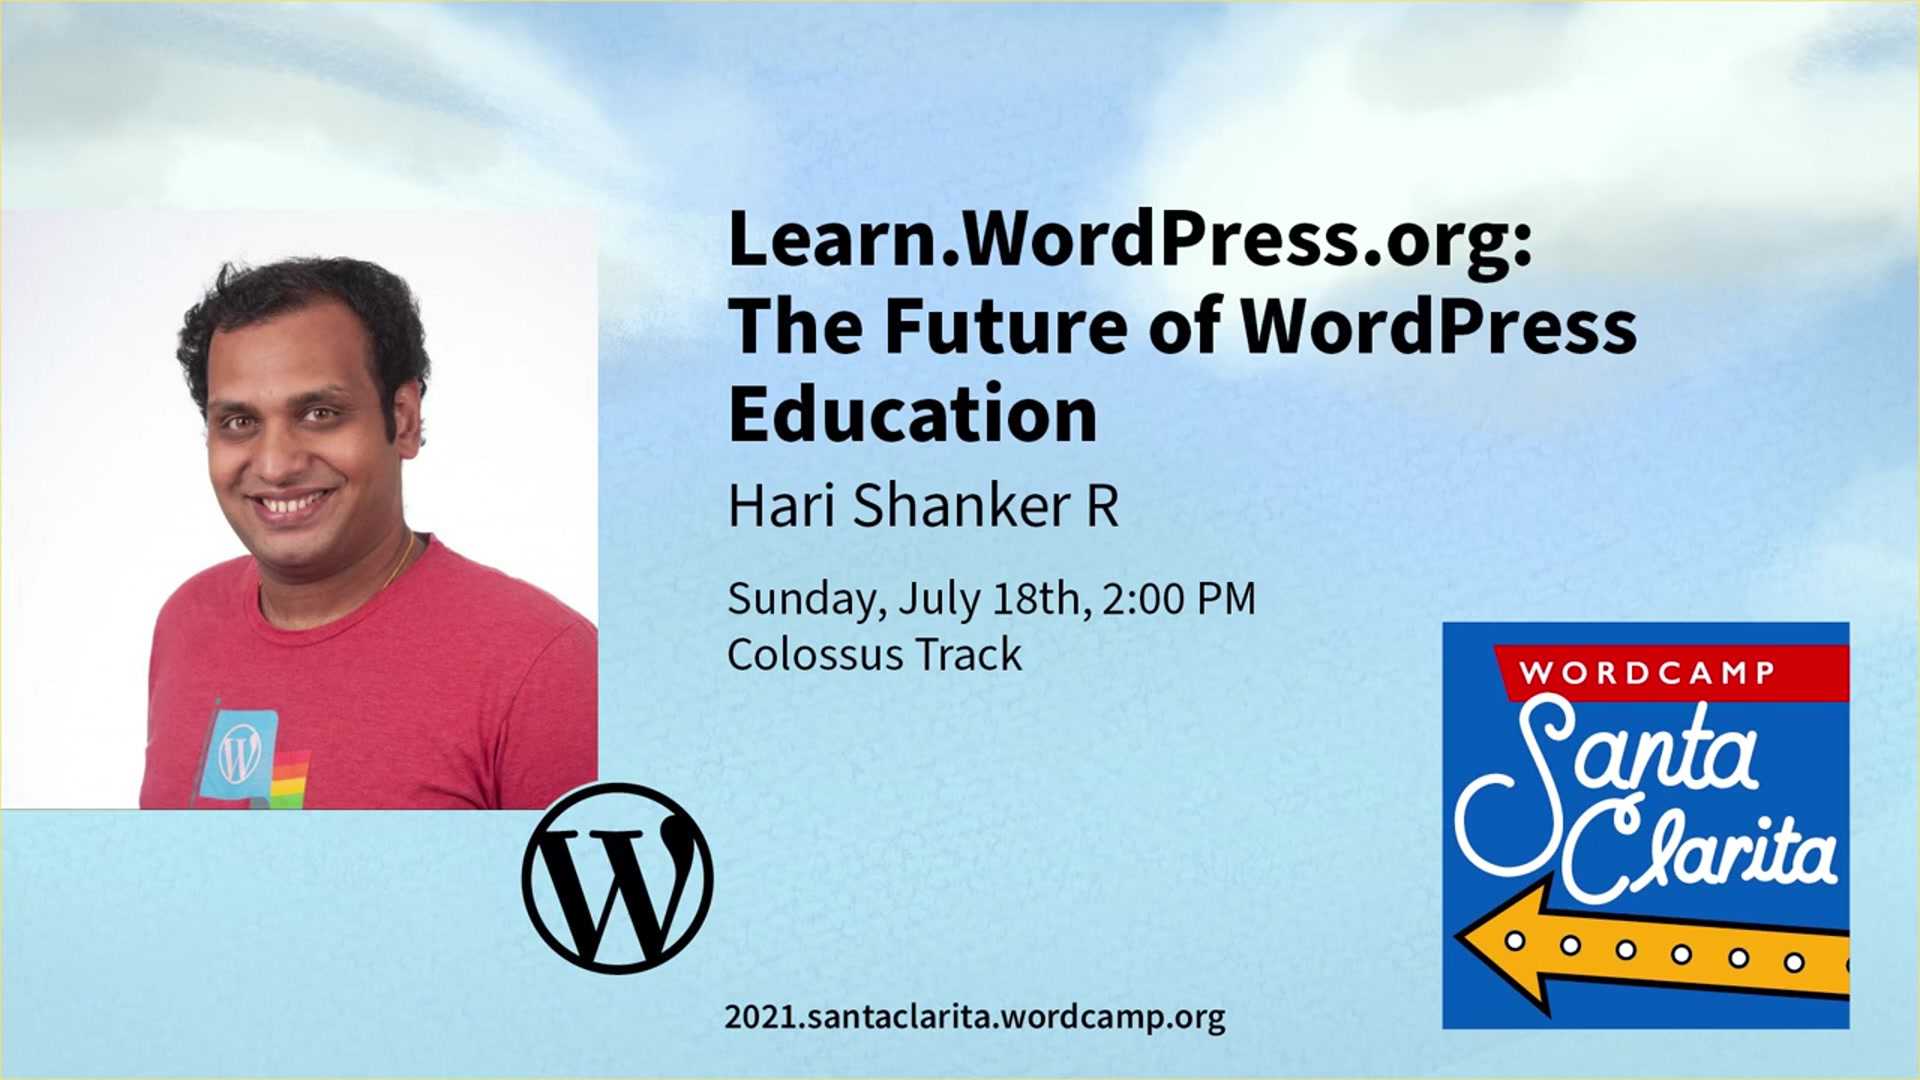 Hari Shanker R: Learn.WordPress.org: The Future of WordPress Education